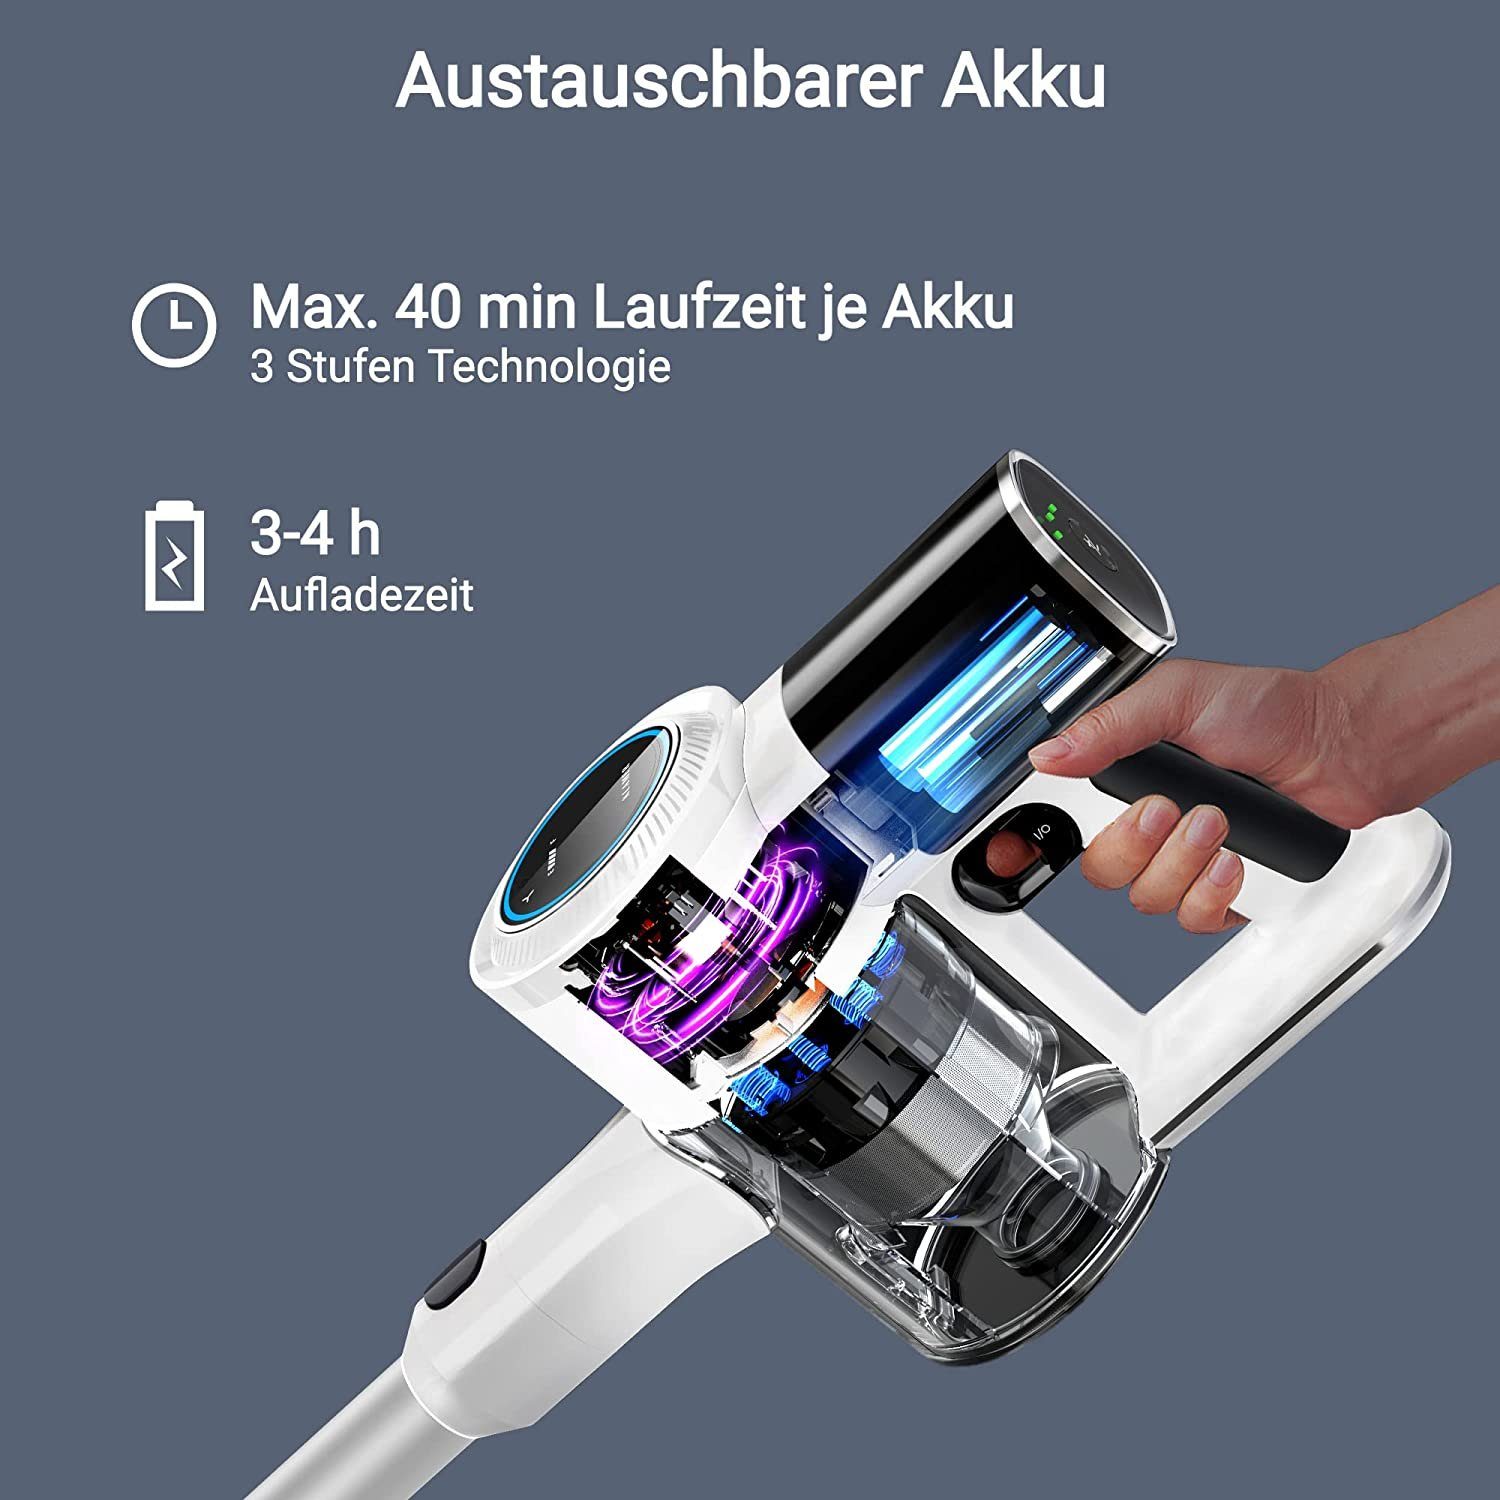 KLAMER KLAMER Akku-Hand-und 420 Stielstaubsauger Handstaubsaug… Akku-Staubsauger, Kabelloser, Flexibler Watt